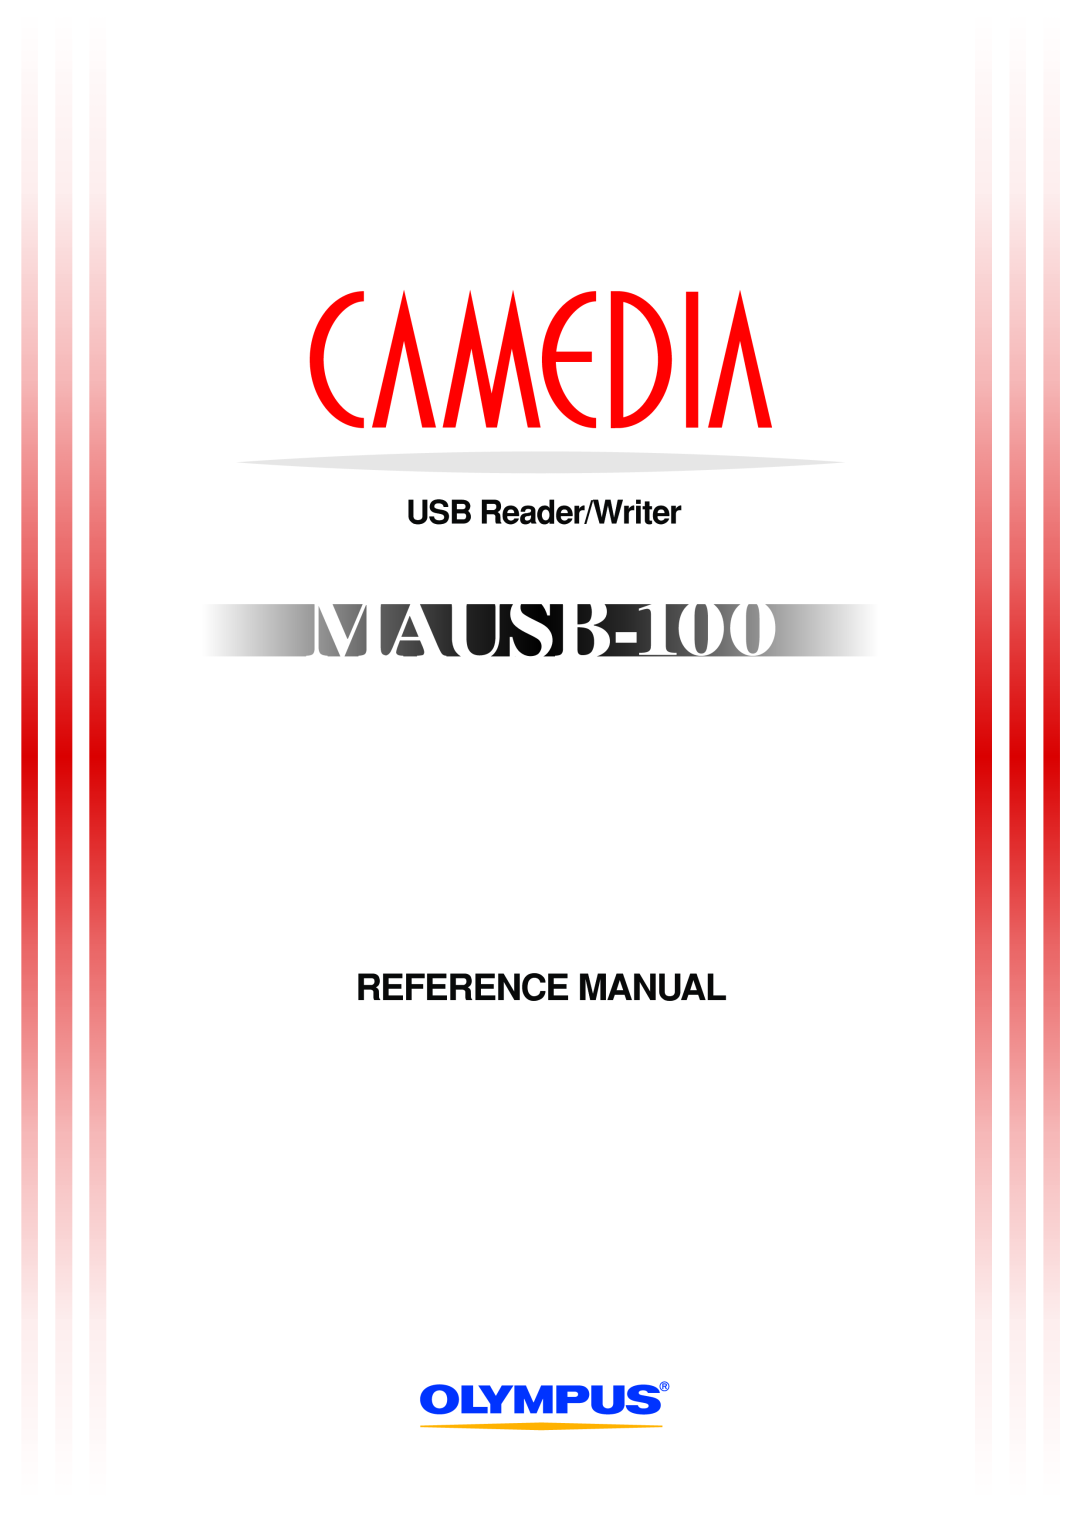 Olympus MAUSB-100 manual Reference Manual, USB Reader/Writer 